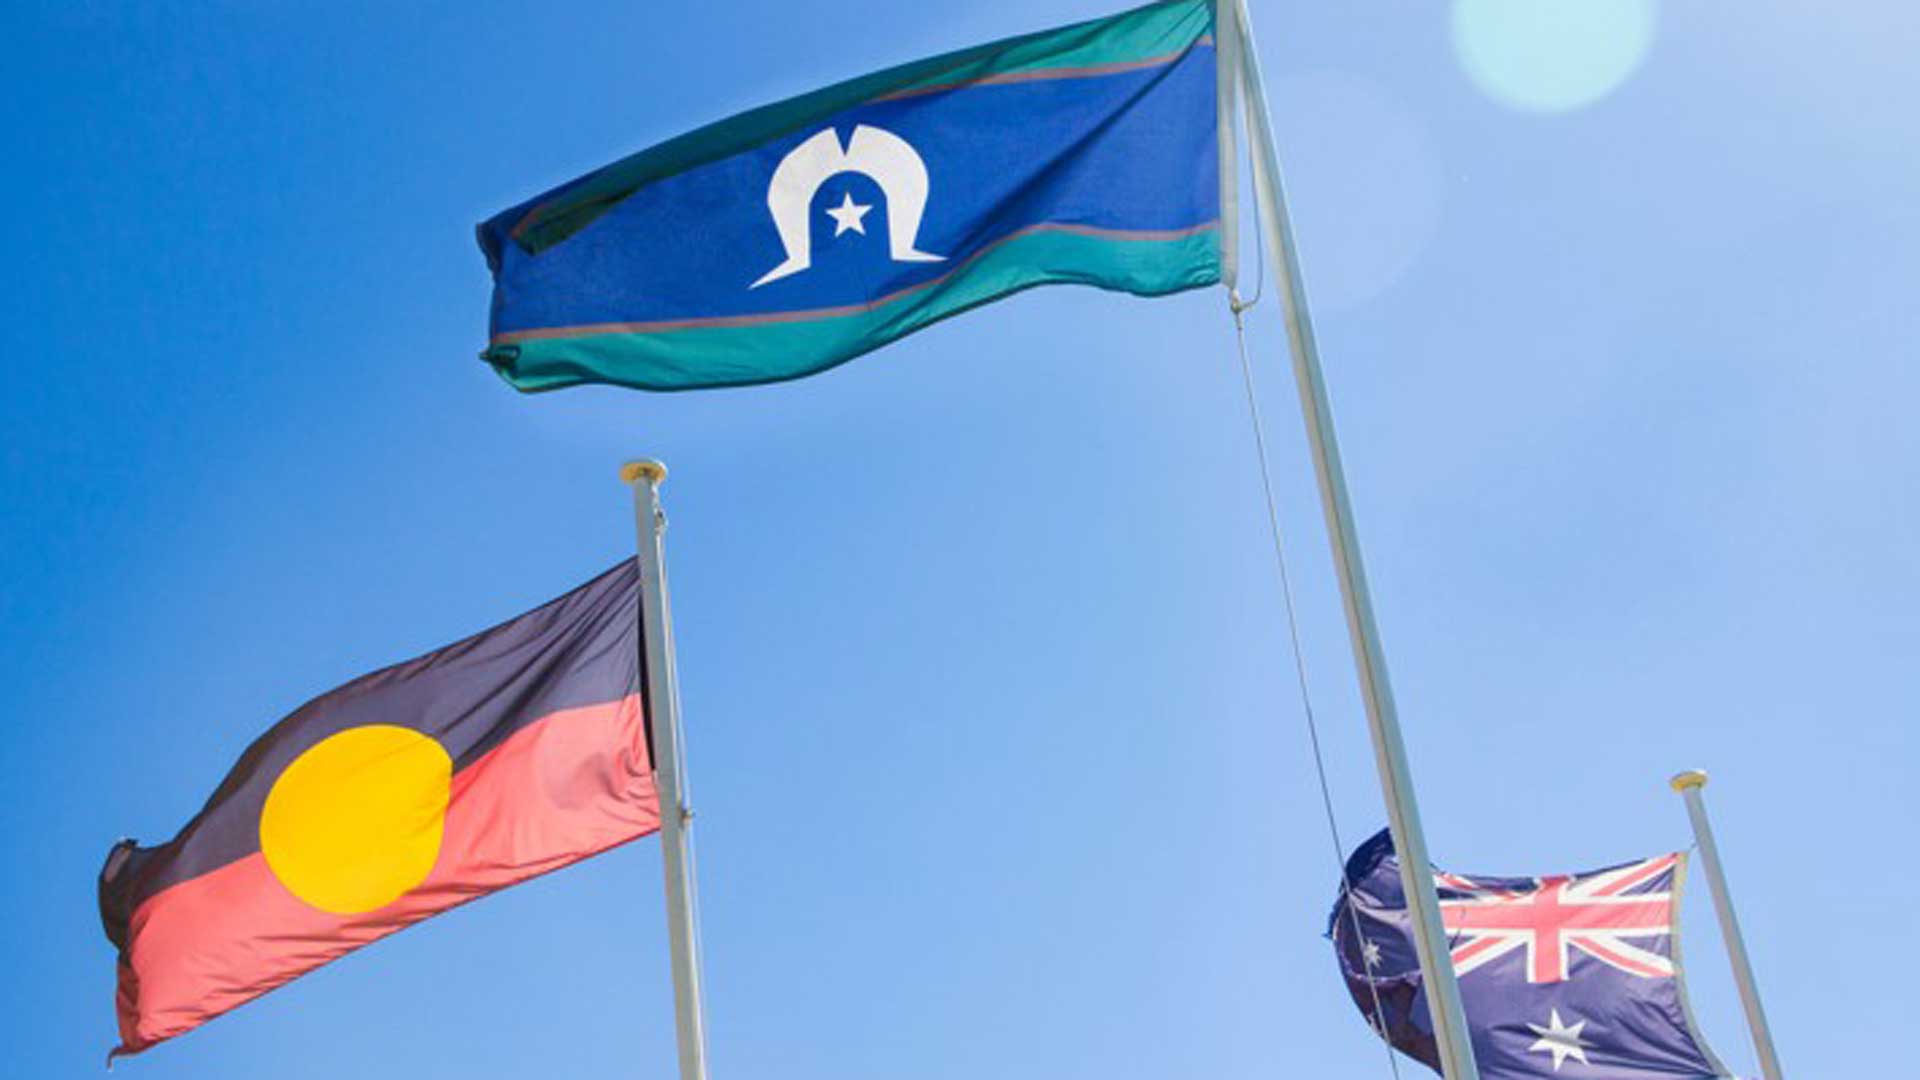 Aboriginal, Torres Strait Islands and Australian flags against a blue sky